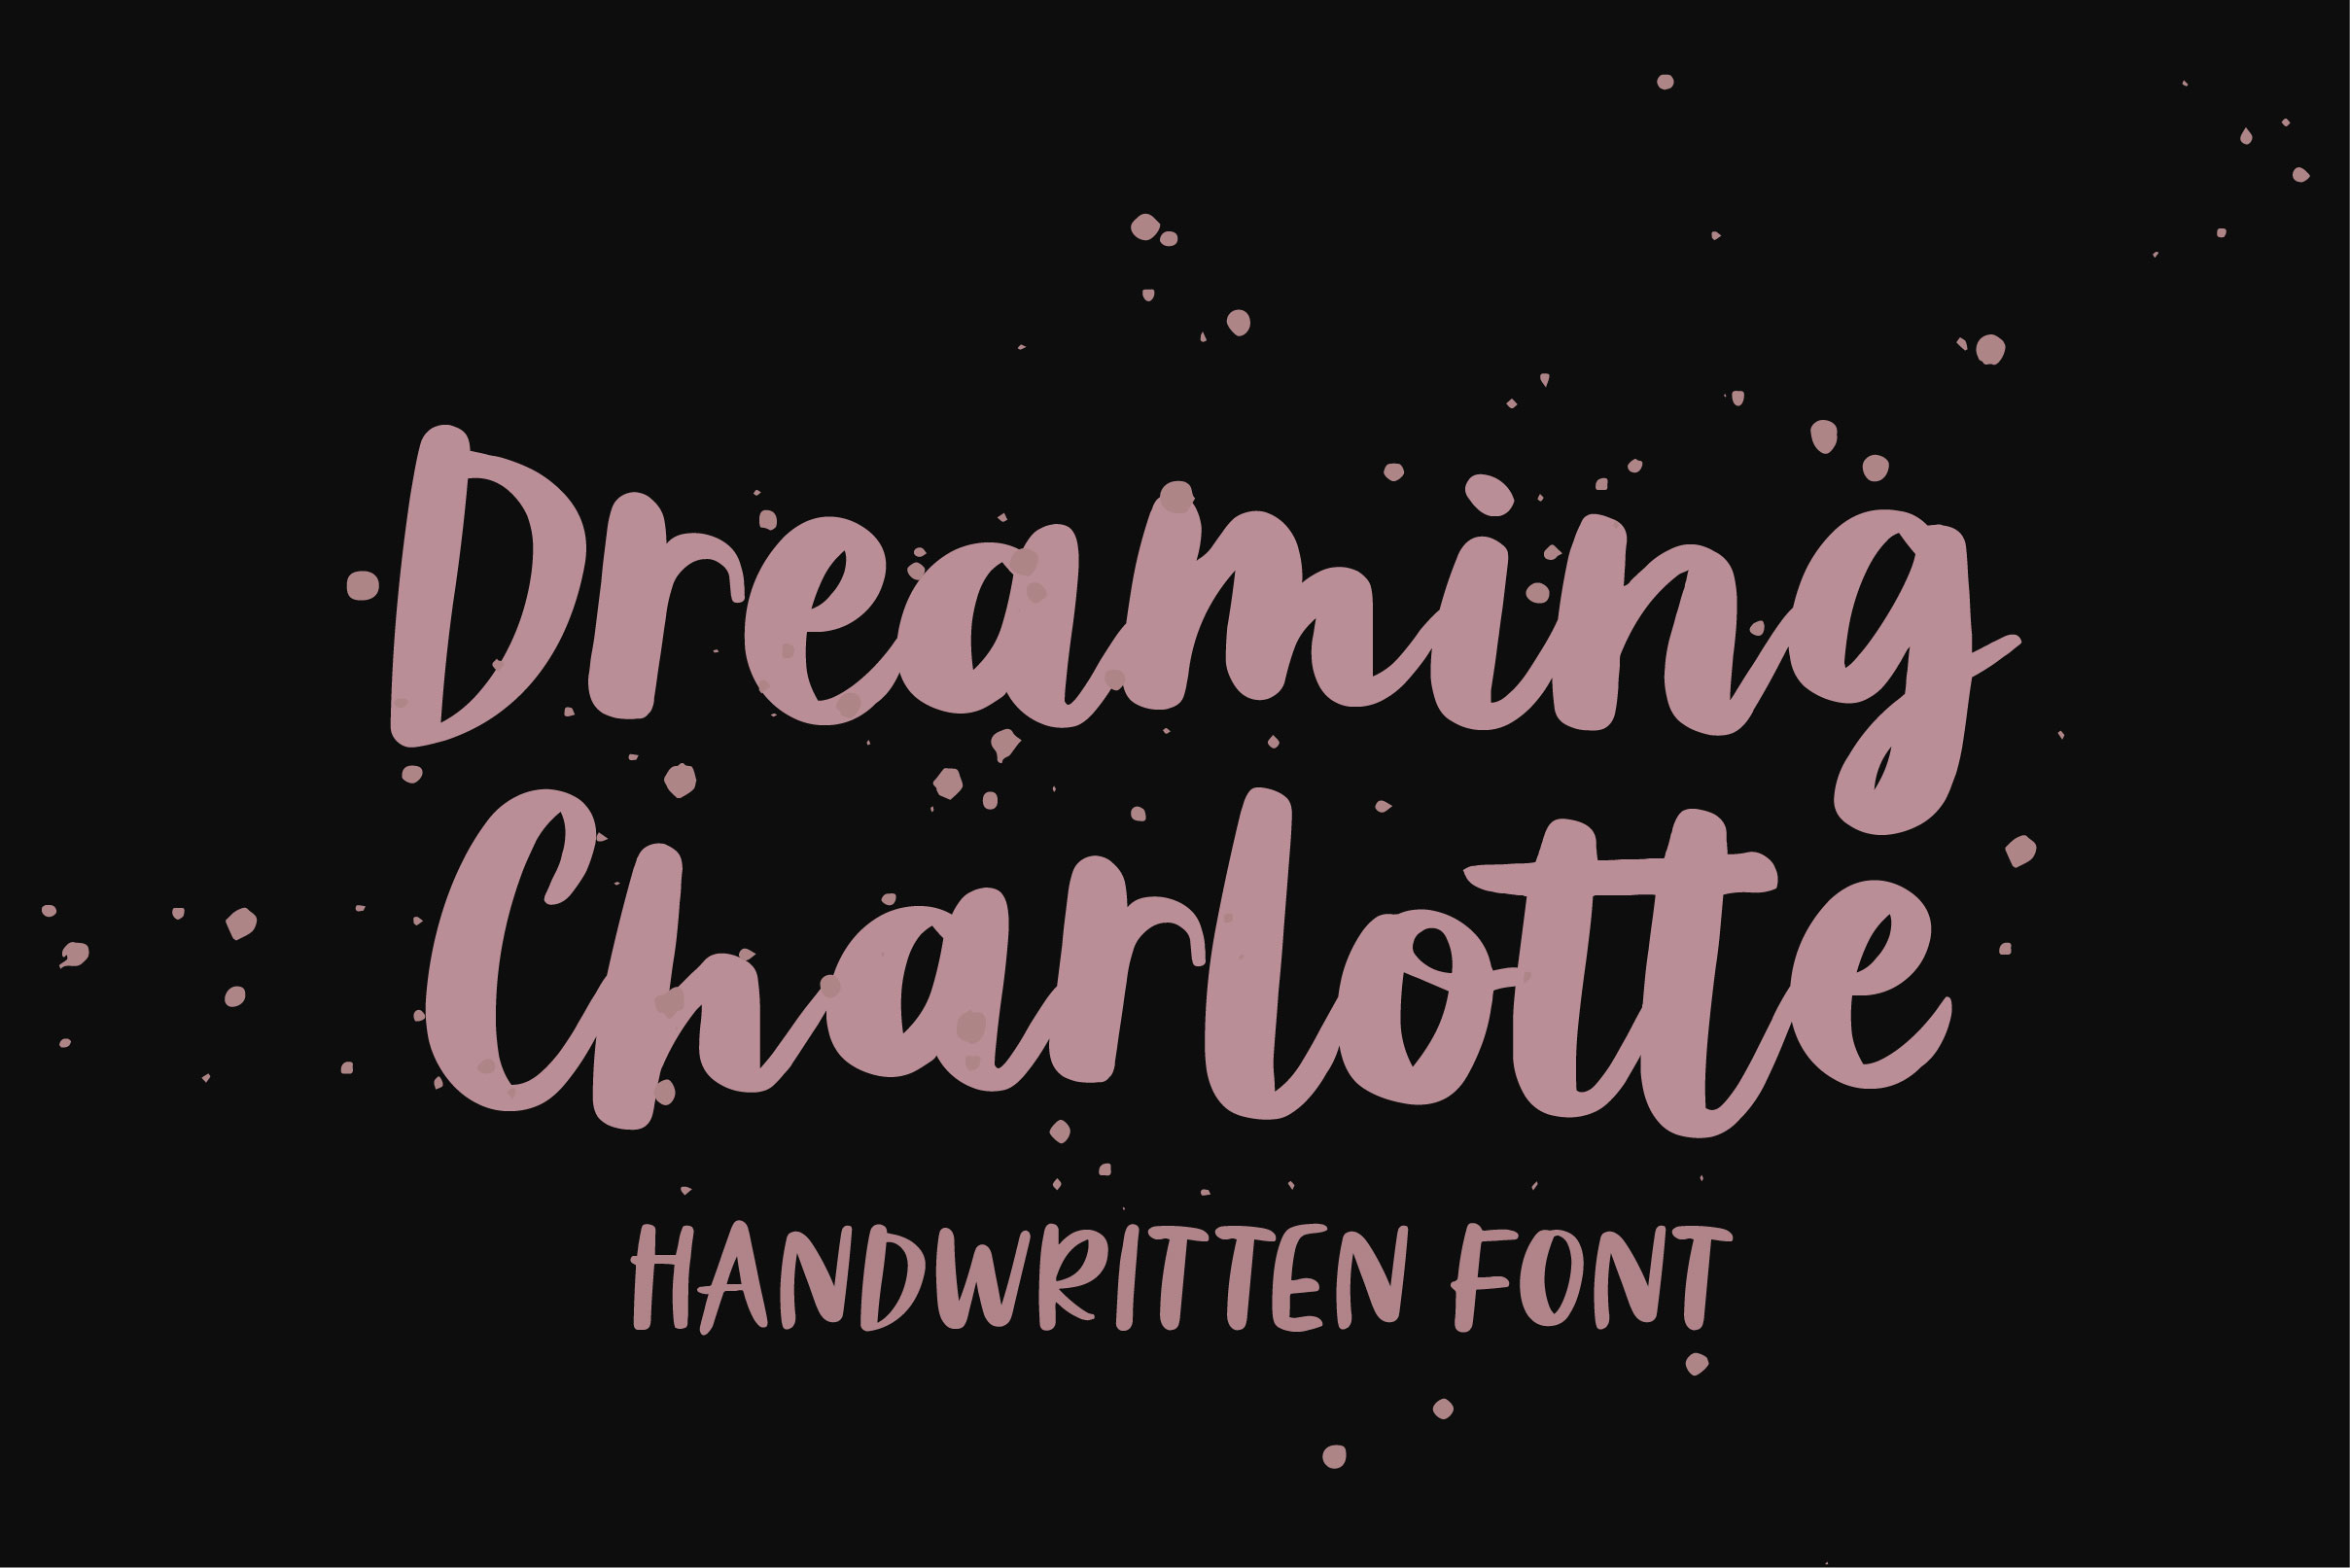 Dreaming Charlotte